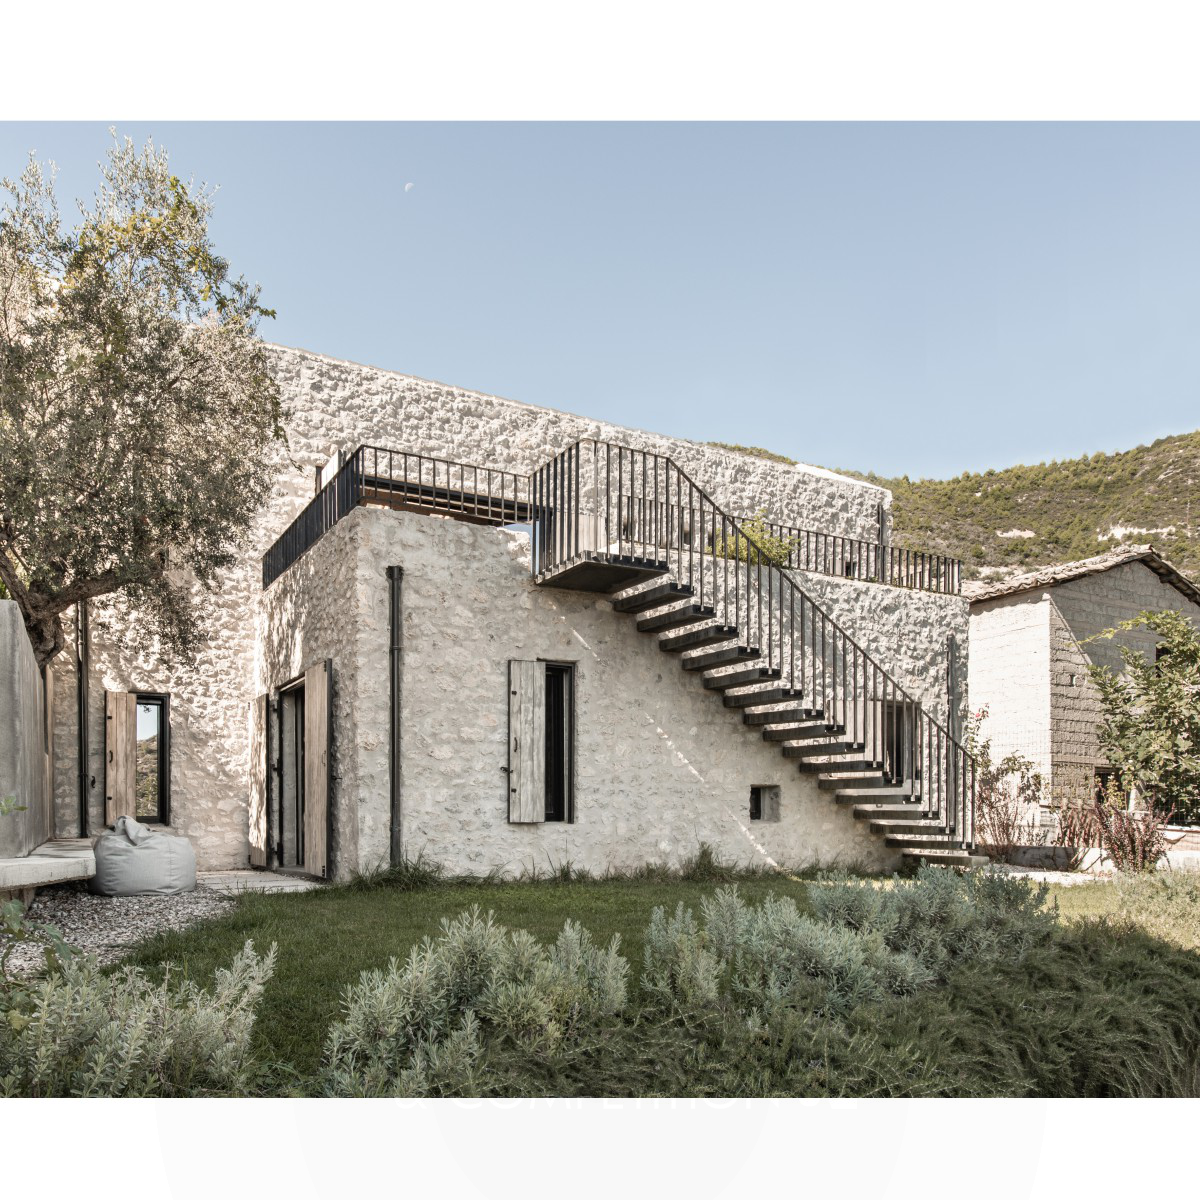 Peloponnese Rural Residential House